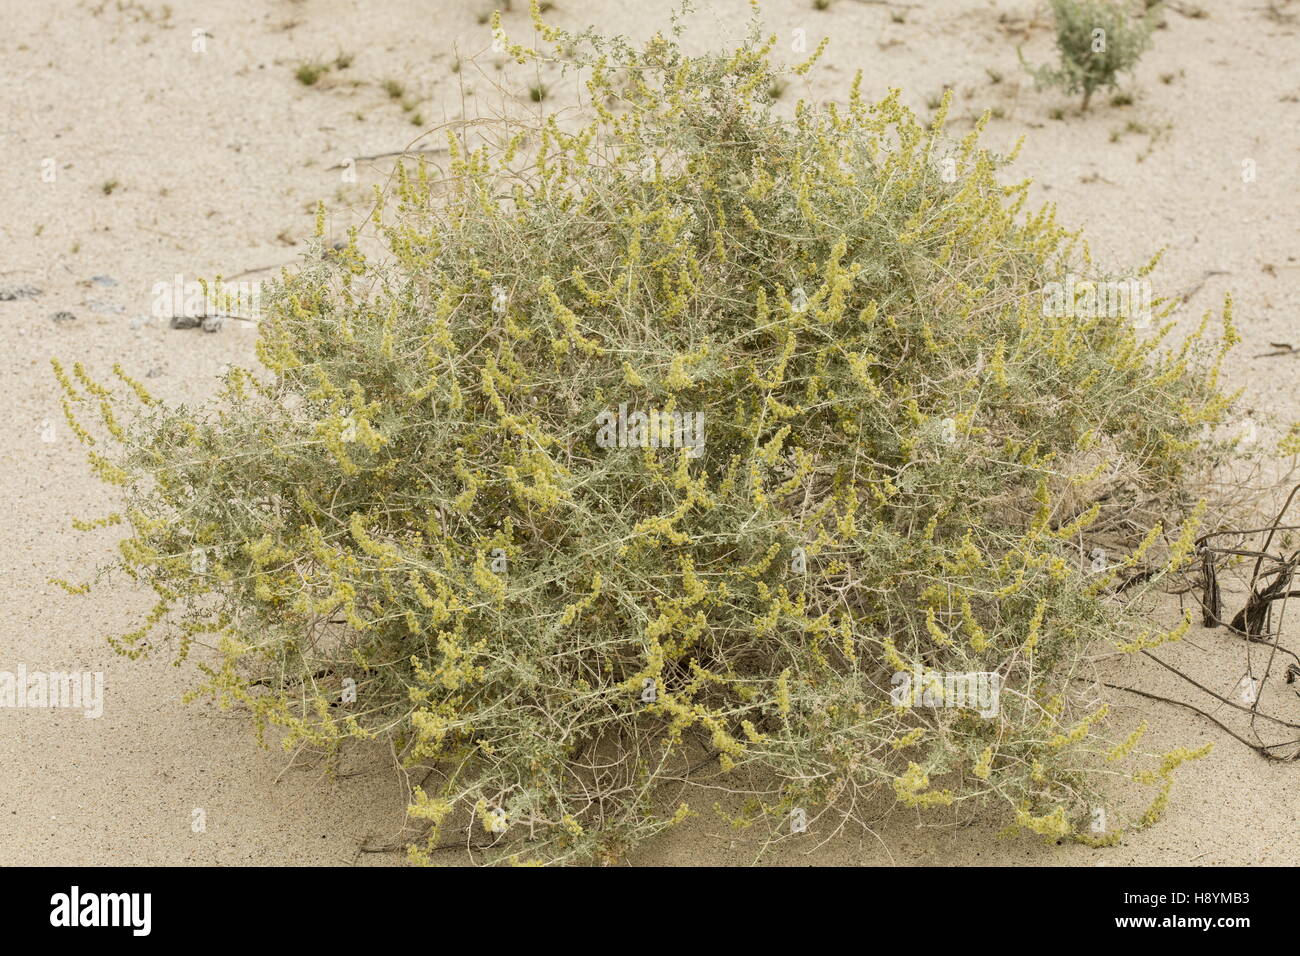 Burro bush, Ambrosia dumosa, in flower, Anza-Borrego Desert State Park, Sonoran Desert, California. Stock Photo